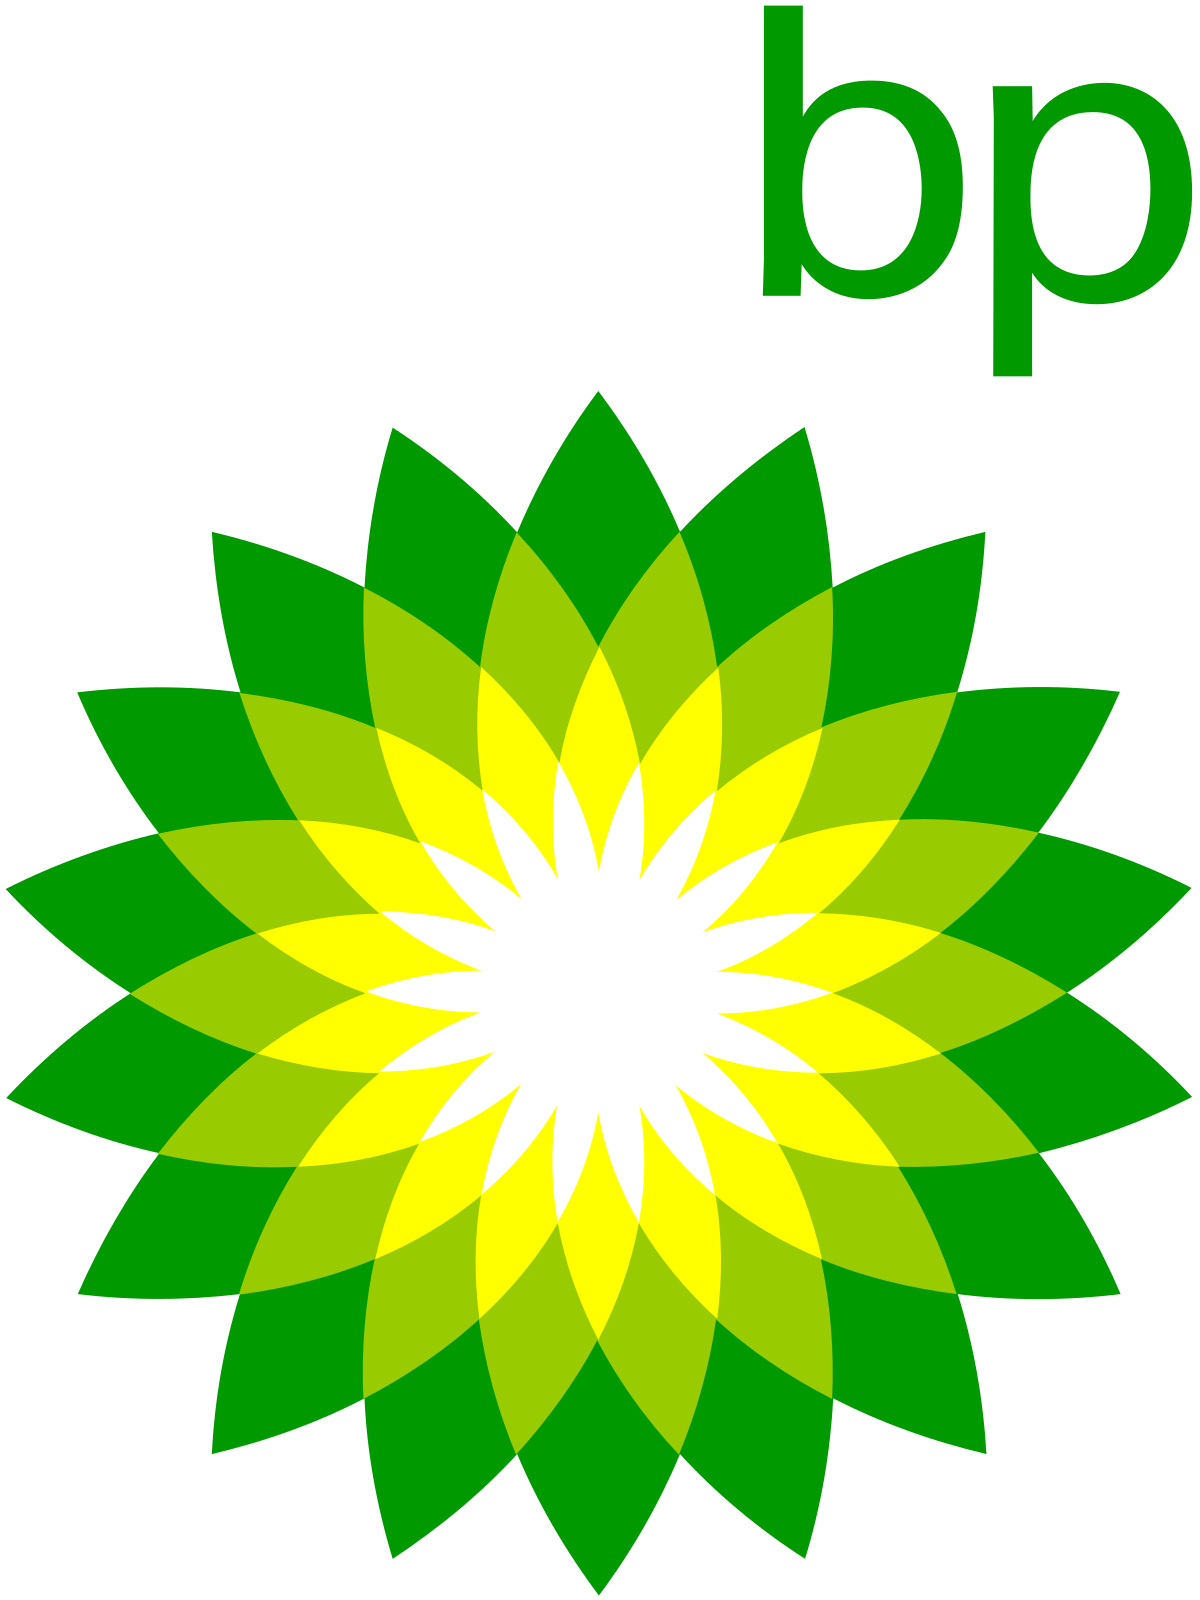 BP_Helios_logo.svg.png